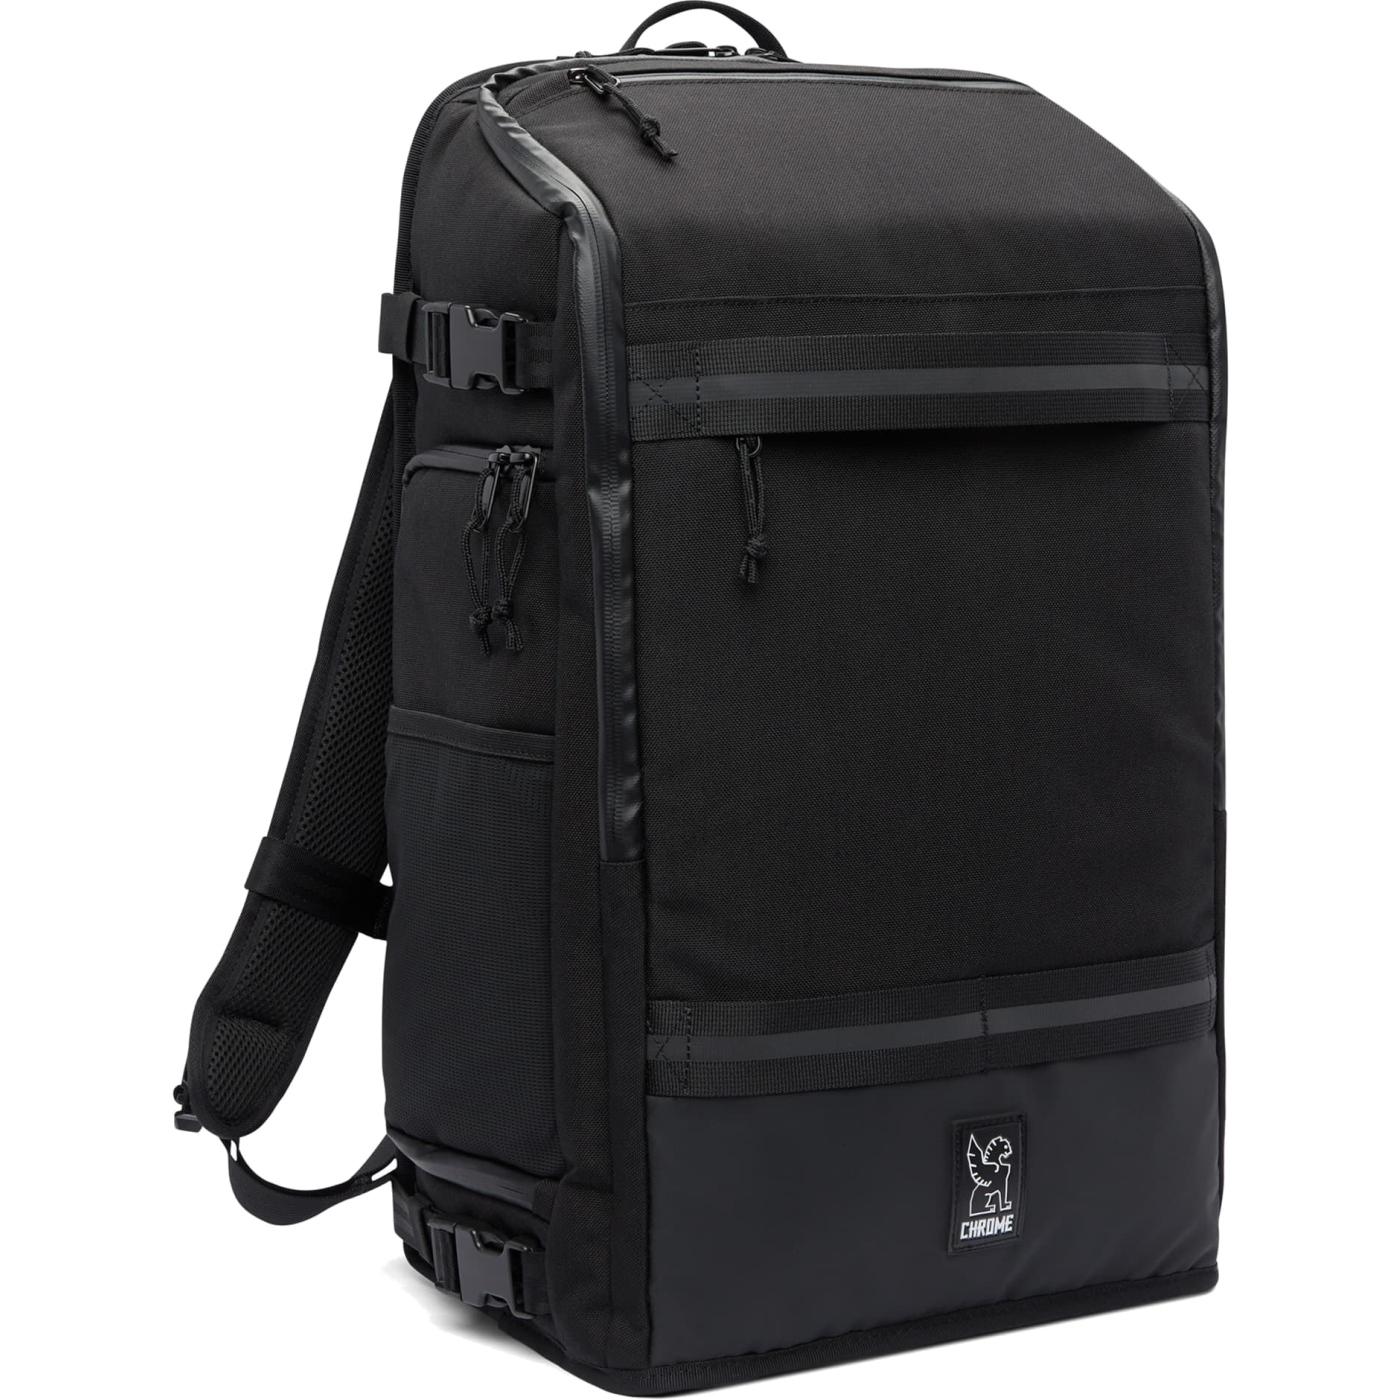 Produktbild von CHROME Niko Camera Backpack 3.0 - 25L Rucksack - All Black